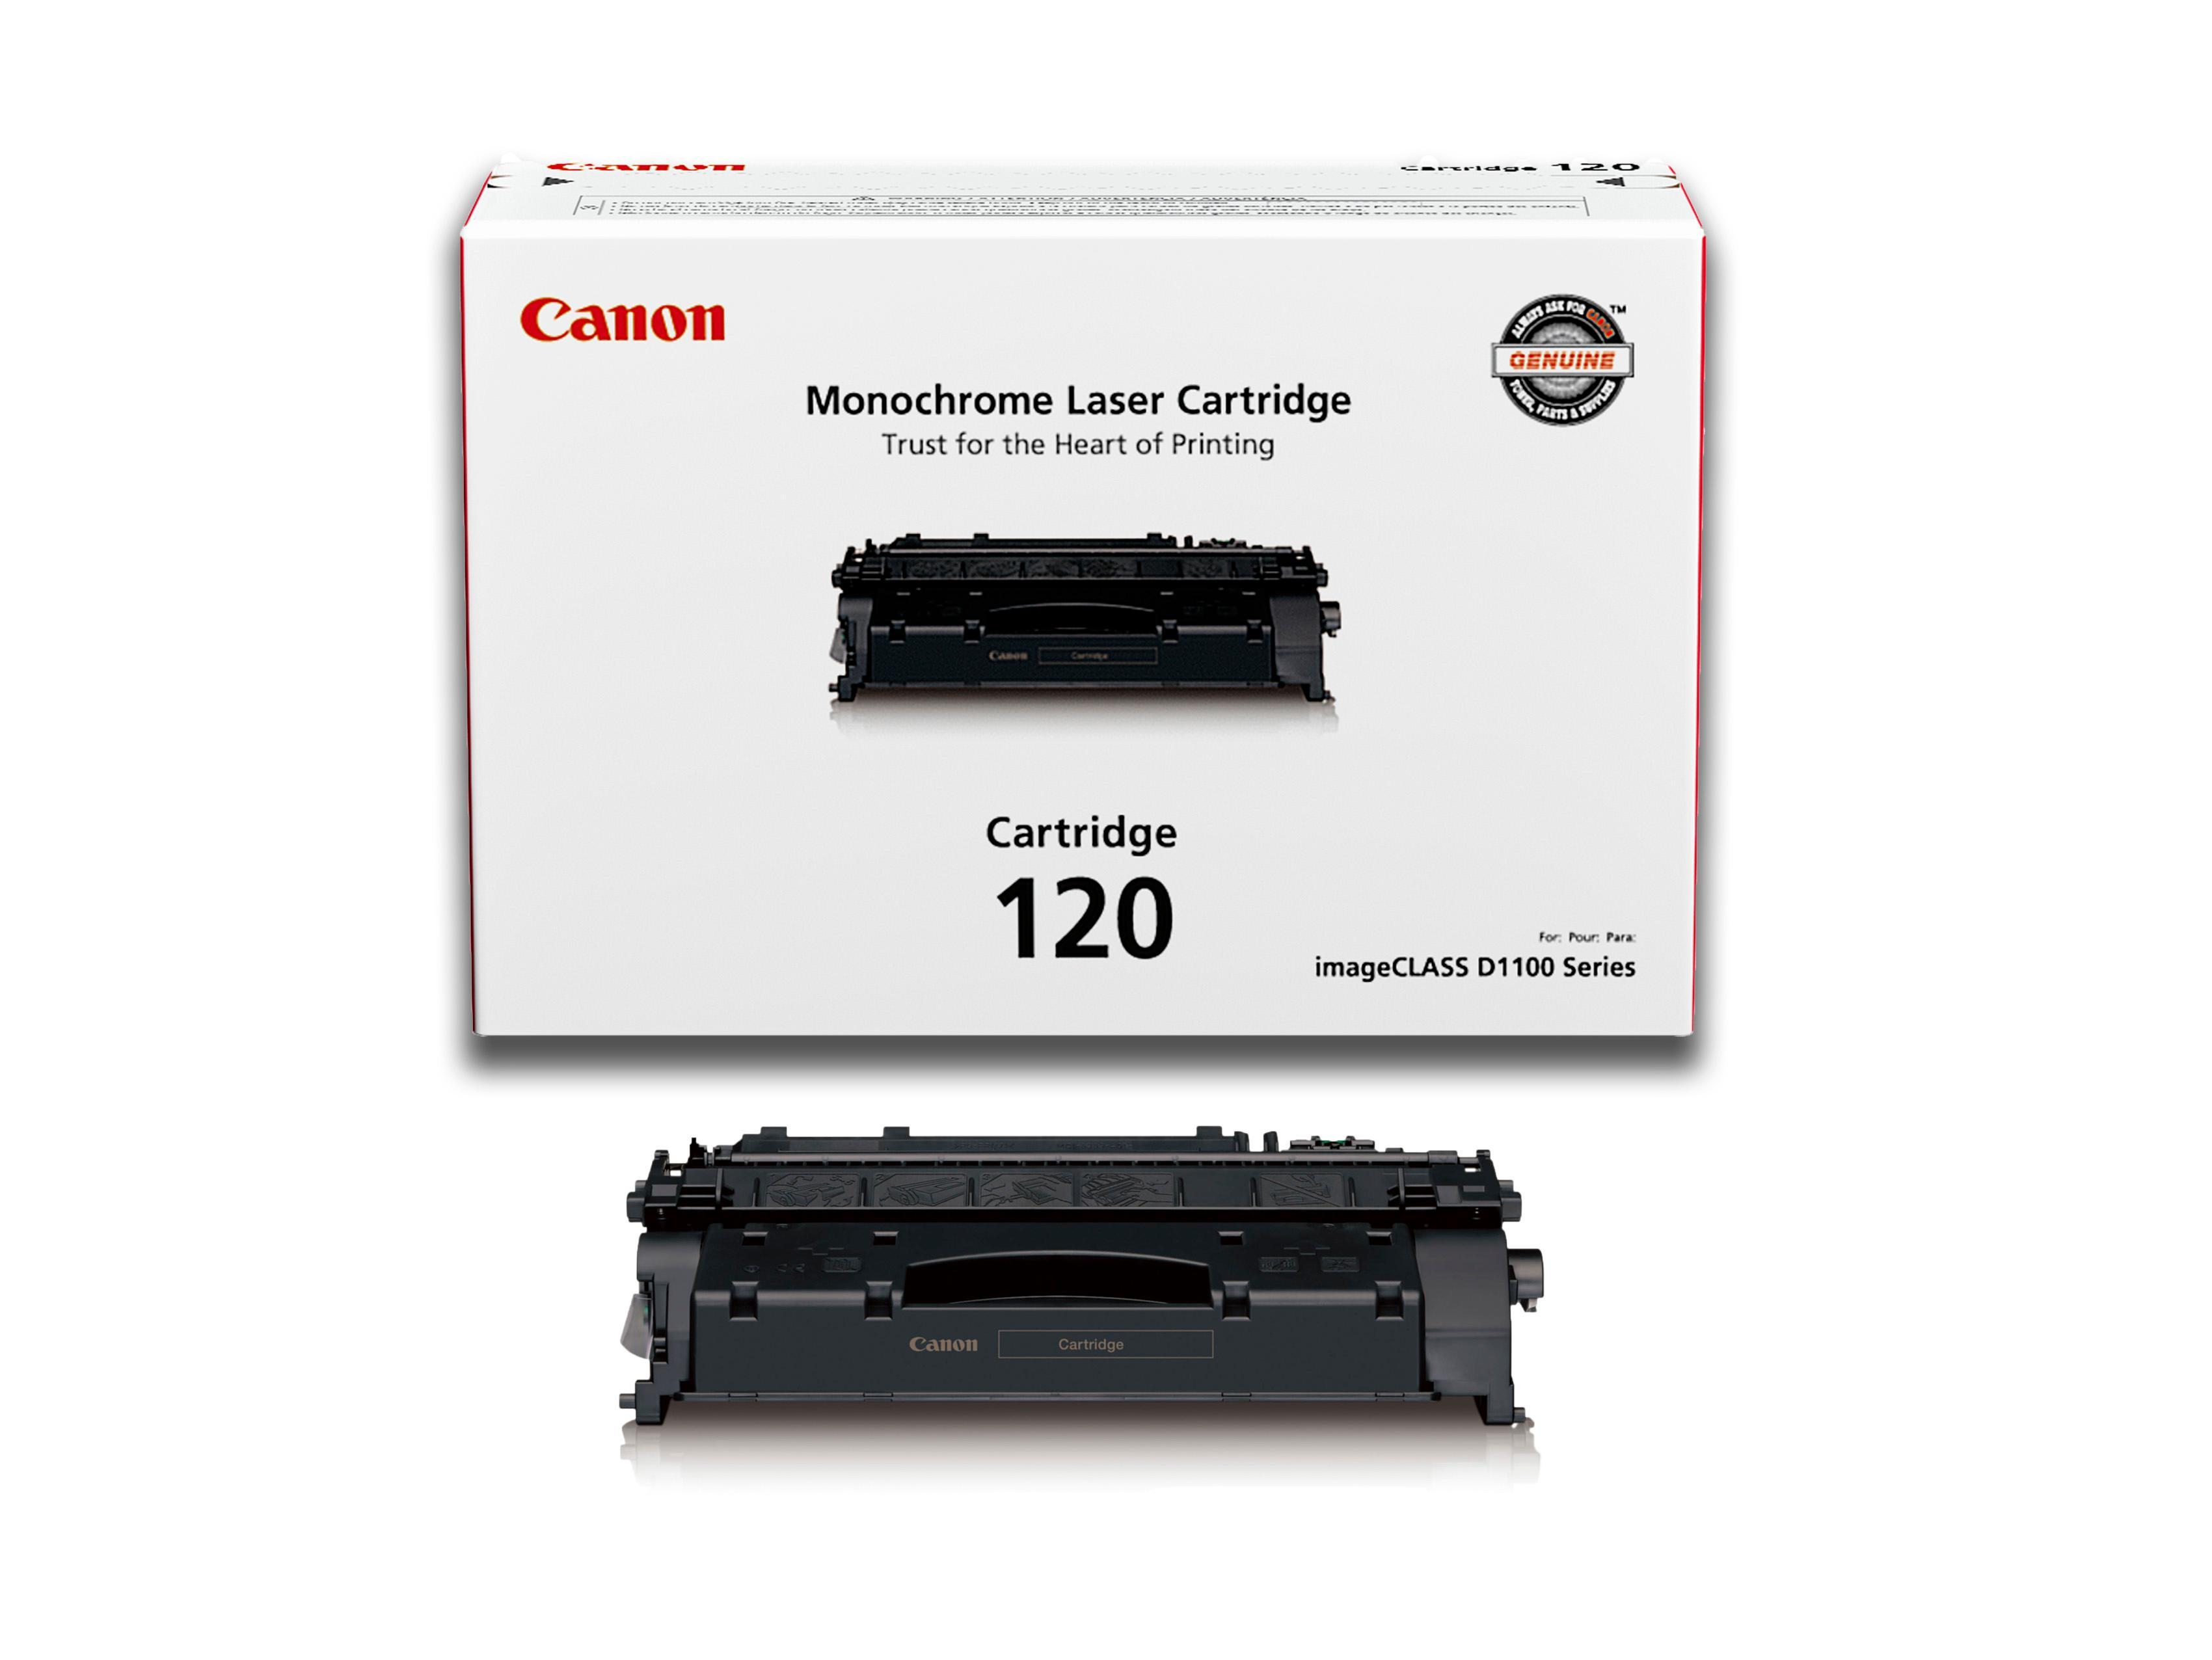 Canon imageCLASS Logo - Amazon.com: Canon Original 120 Toner Cartridge - Black: Office Products